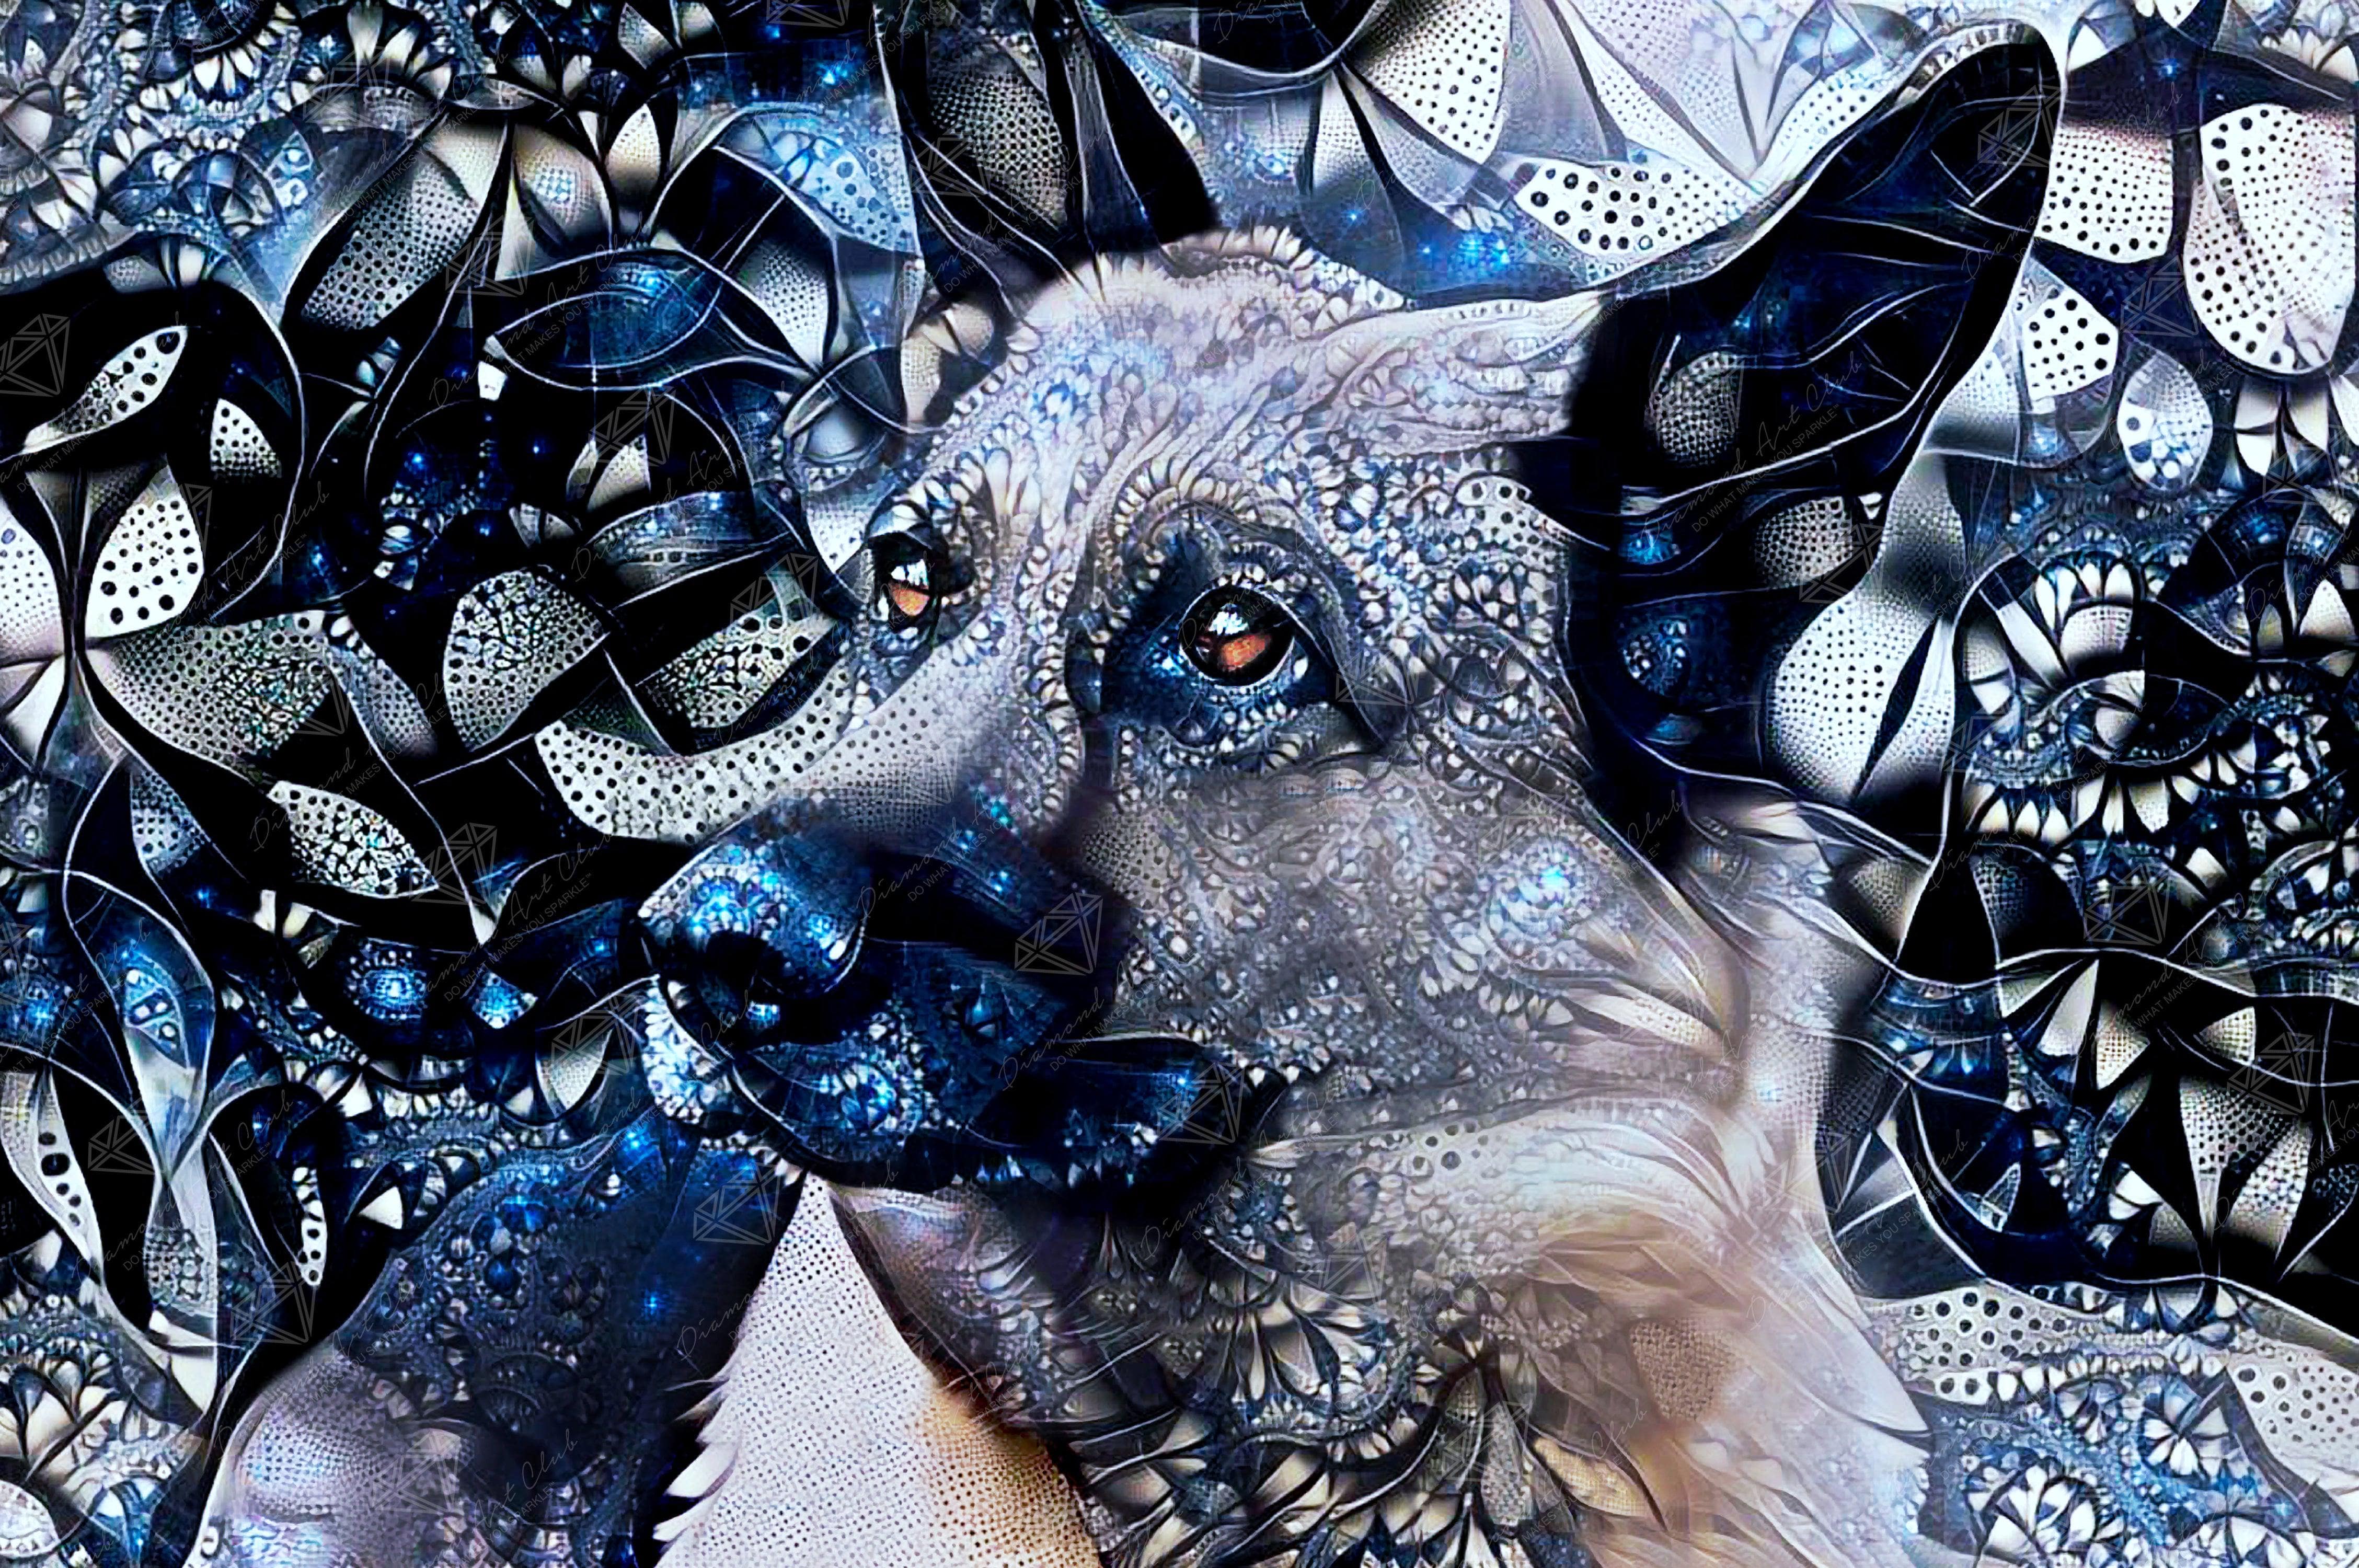 Abstract Wolf Diamond Painting Kits 20% Off Today – DIY Diamond